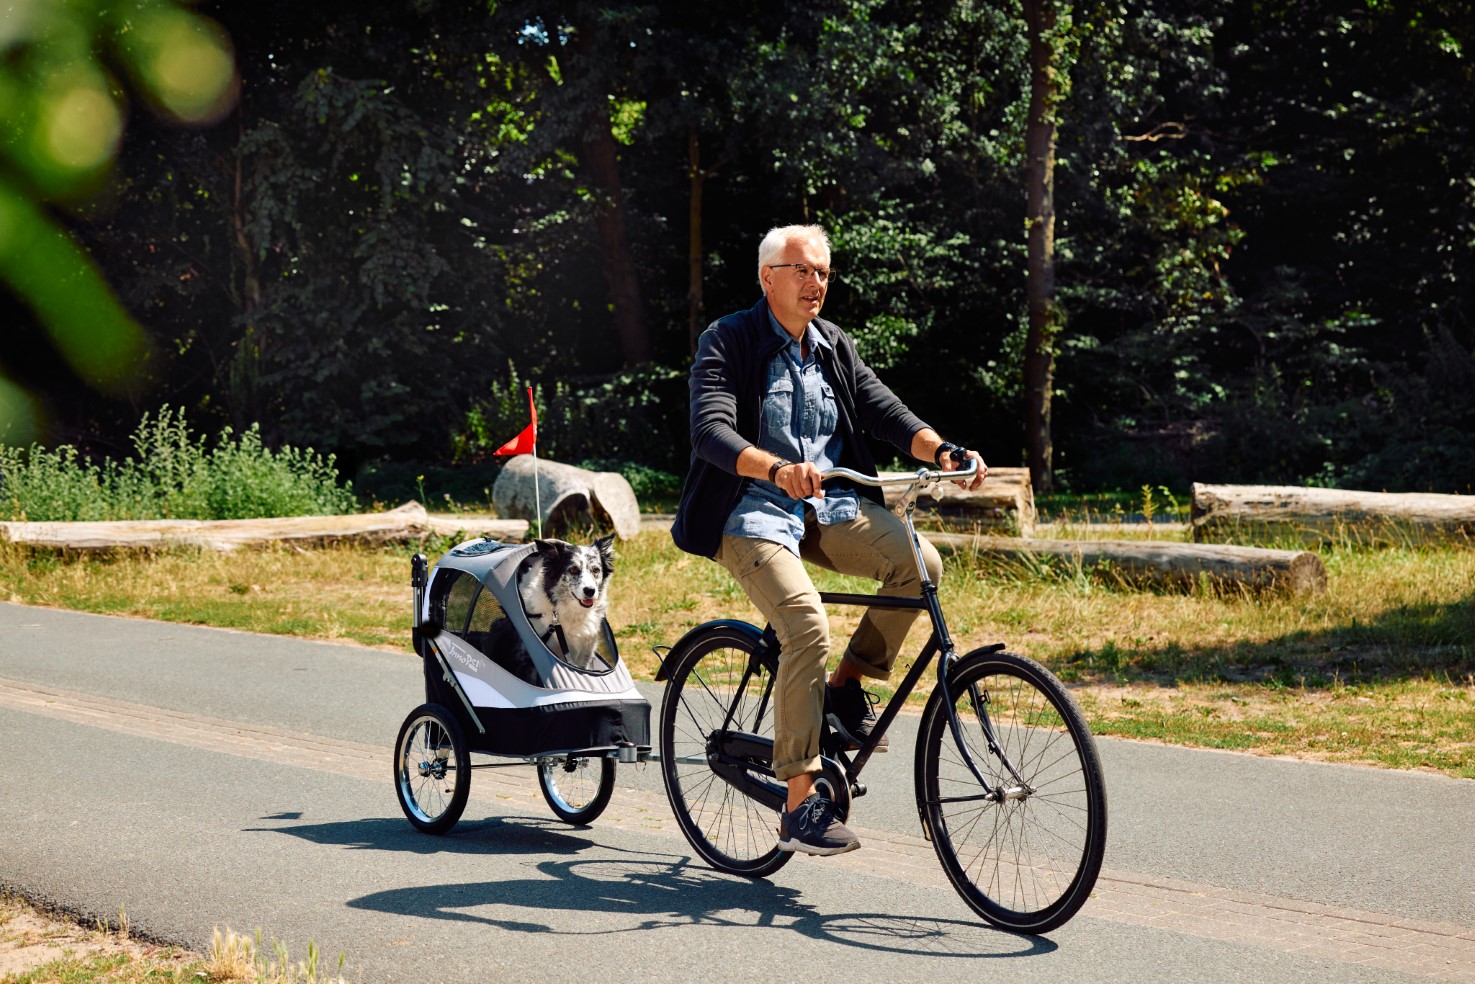 innopet-bike-trailer-sporty-dog-trailer-outside-man-with-dog